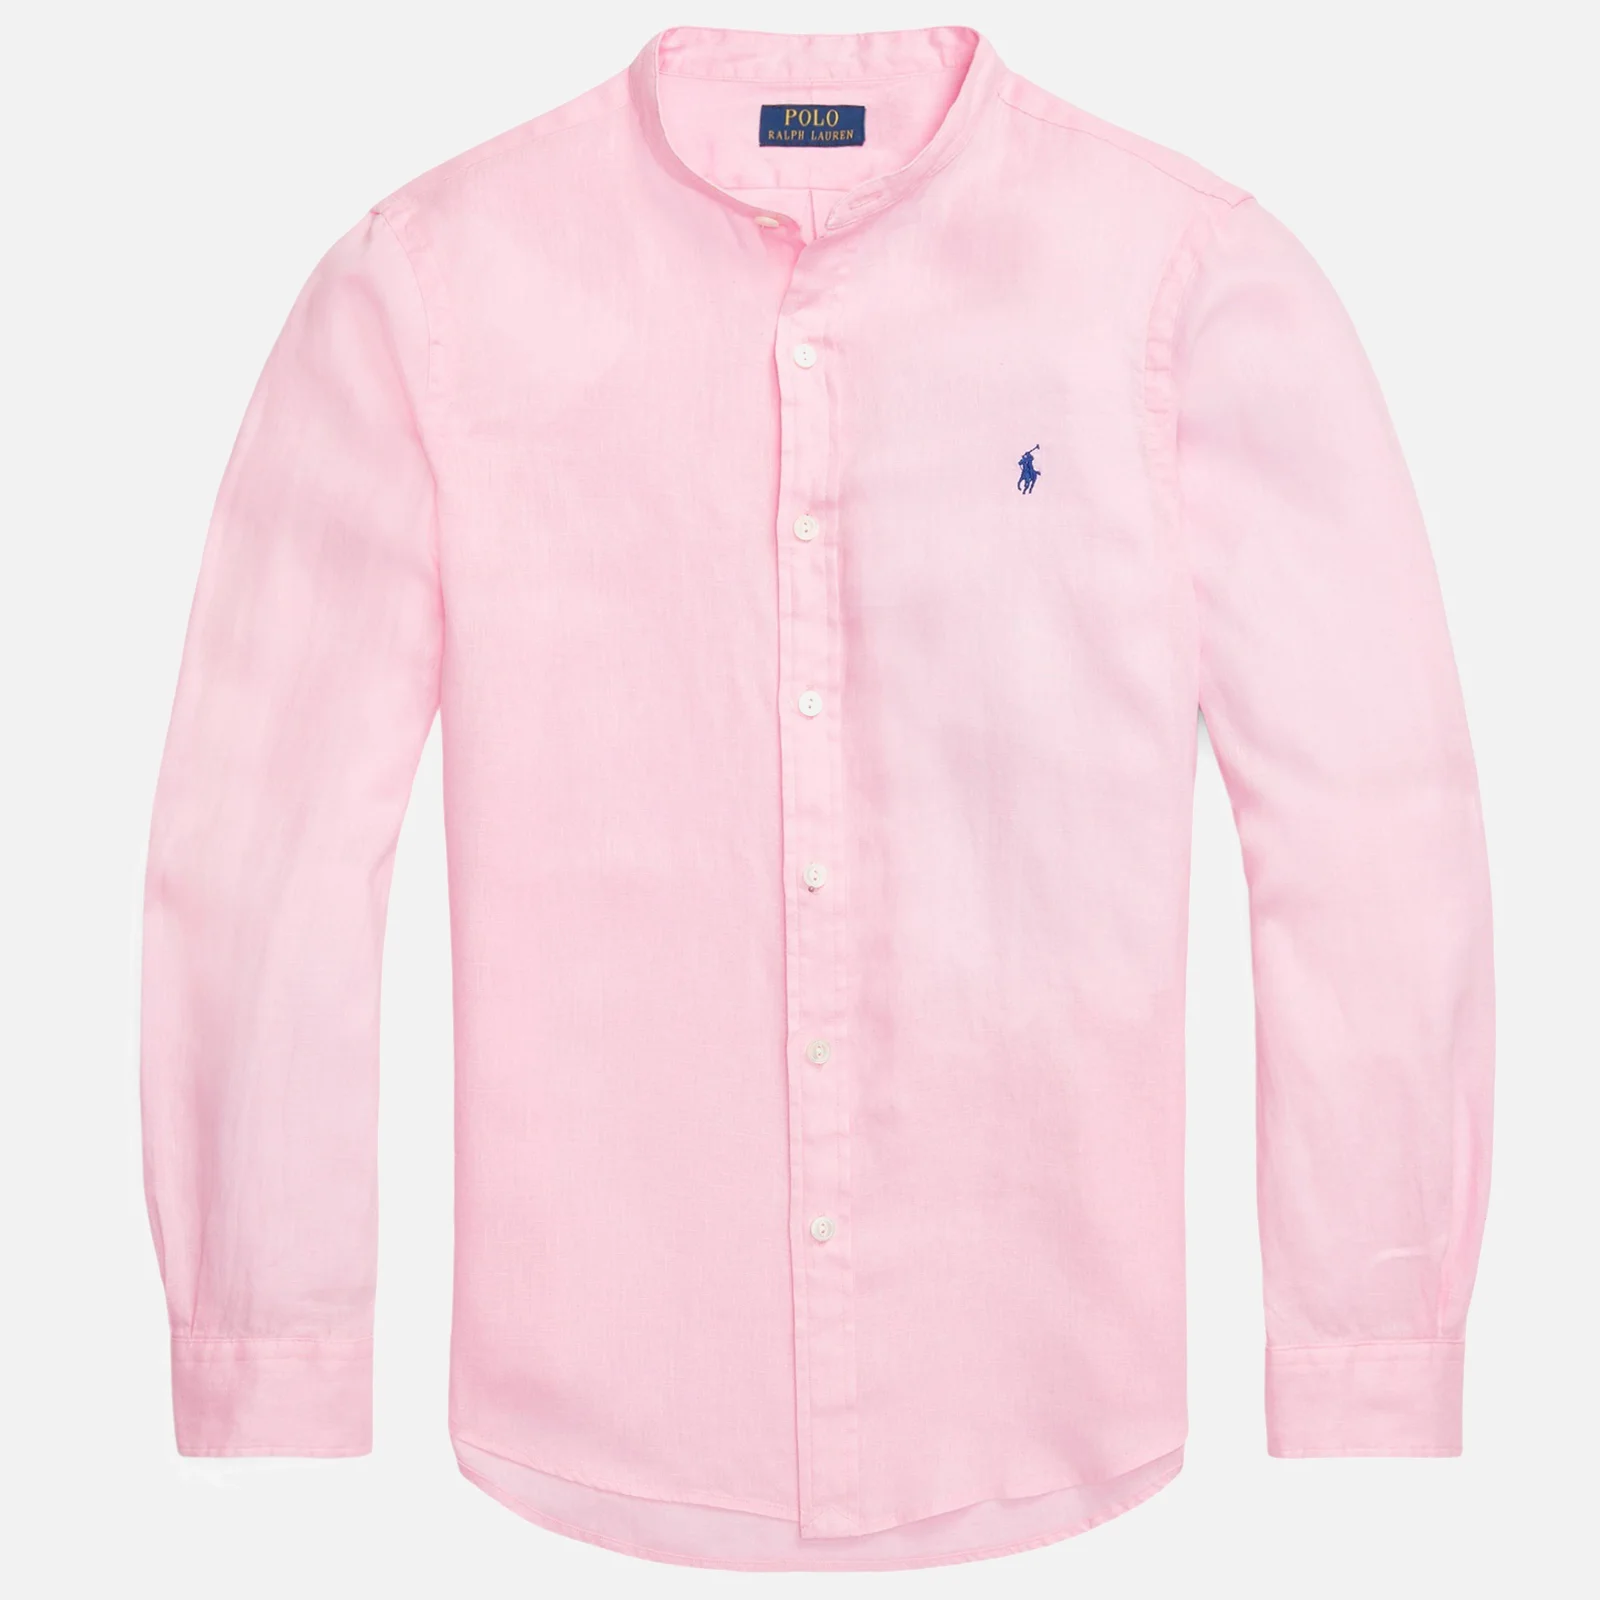 Polo Ralph Lauren Men's Dye Linen Button Down Shirt - Carmel Pink Image 1